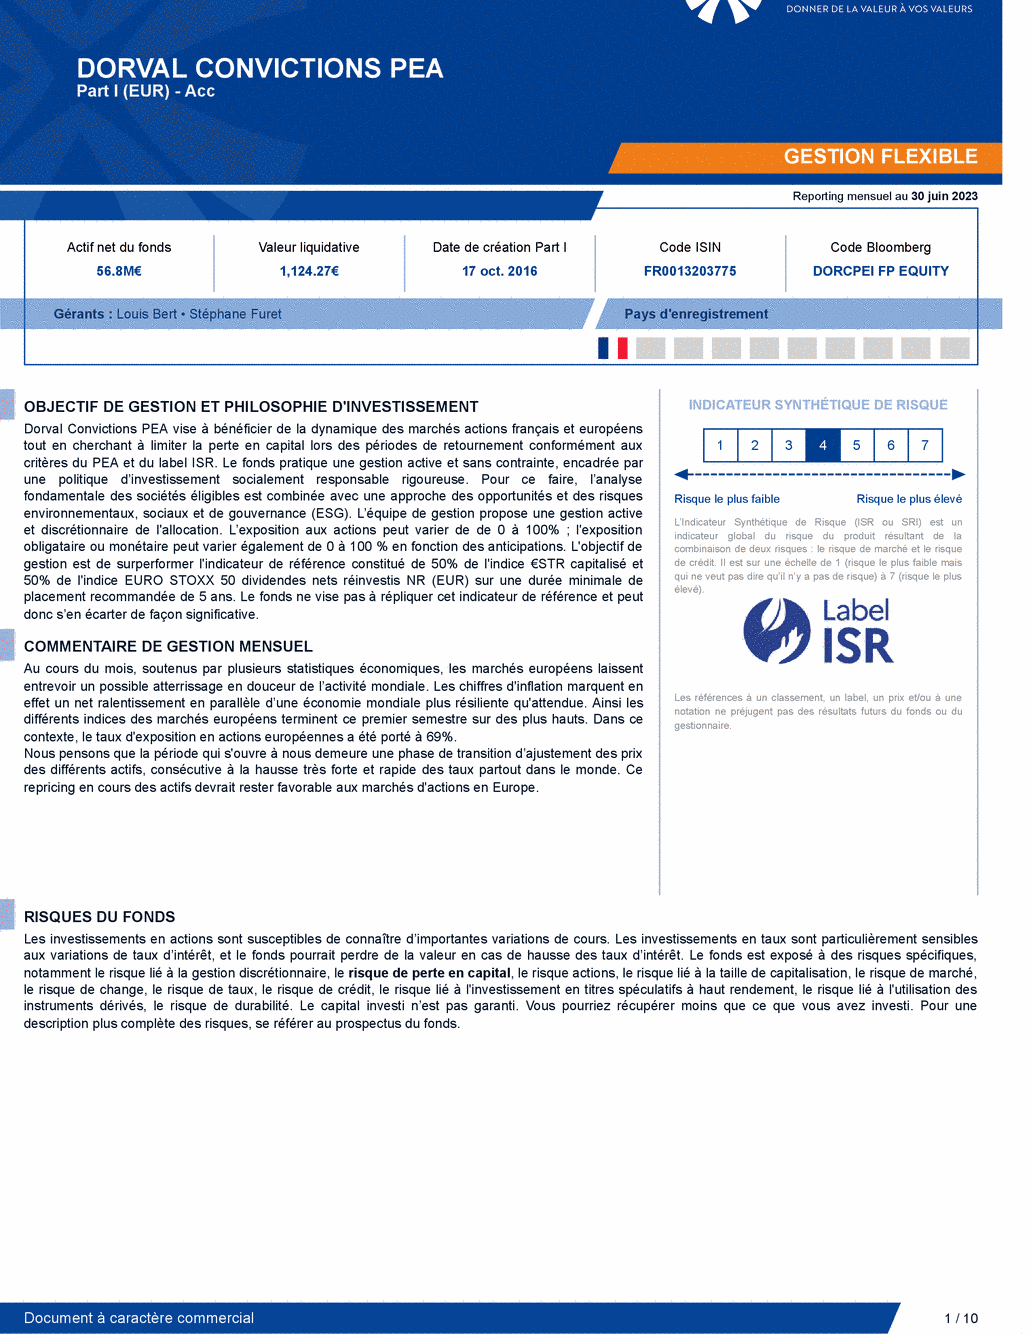 Reporting DORVAL CONVICTIONS PEA Part I - 30/06/2023 - Français